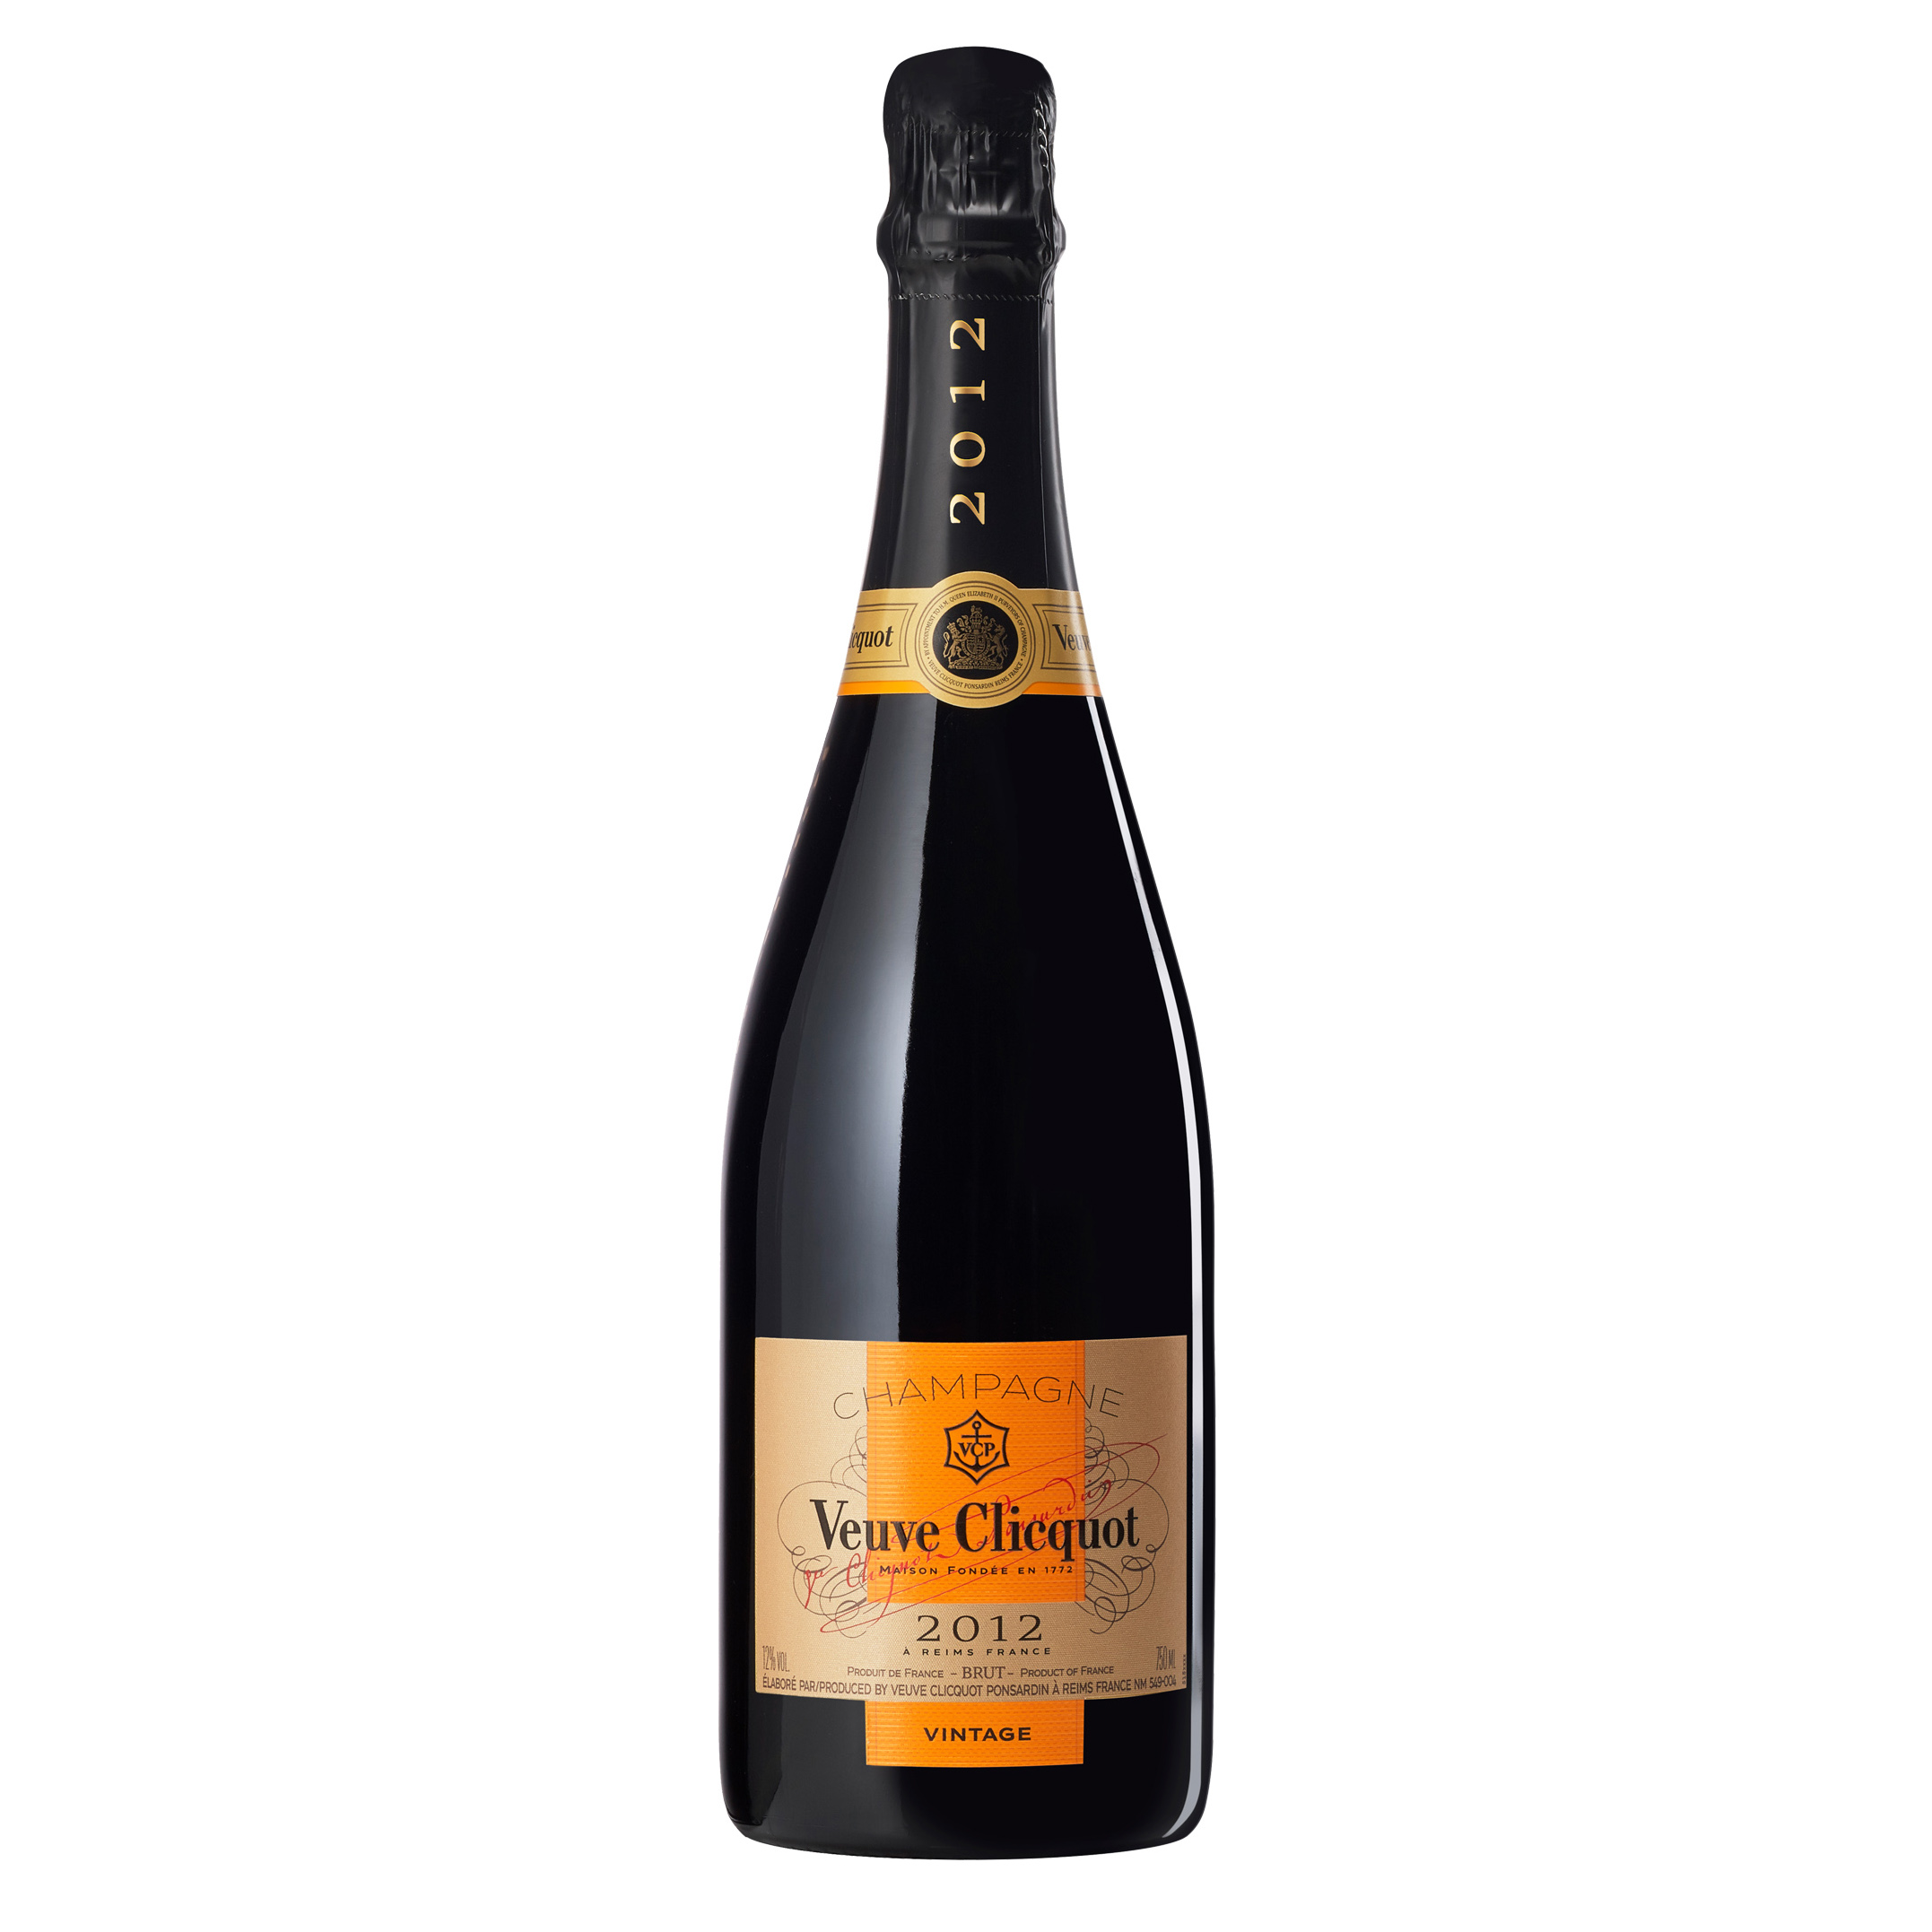 Send Veuve Clicquot Vintage 2012 75cl - Veuve Vintage Champagne Gift Online